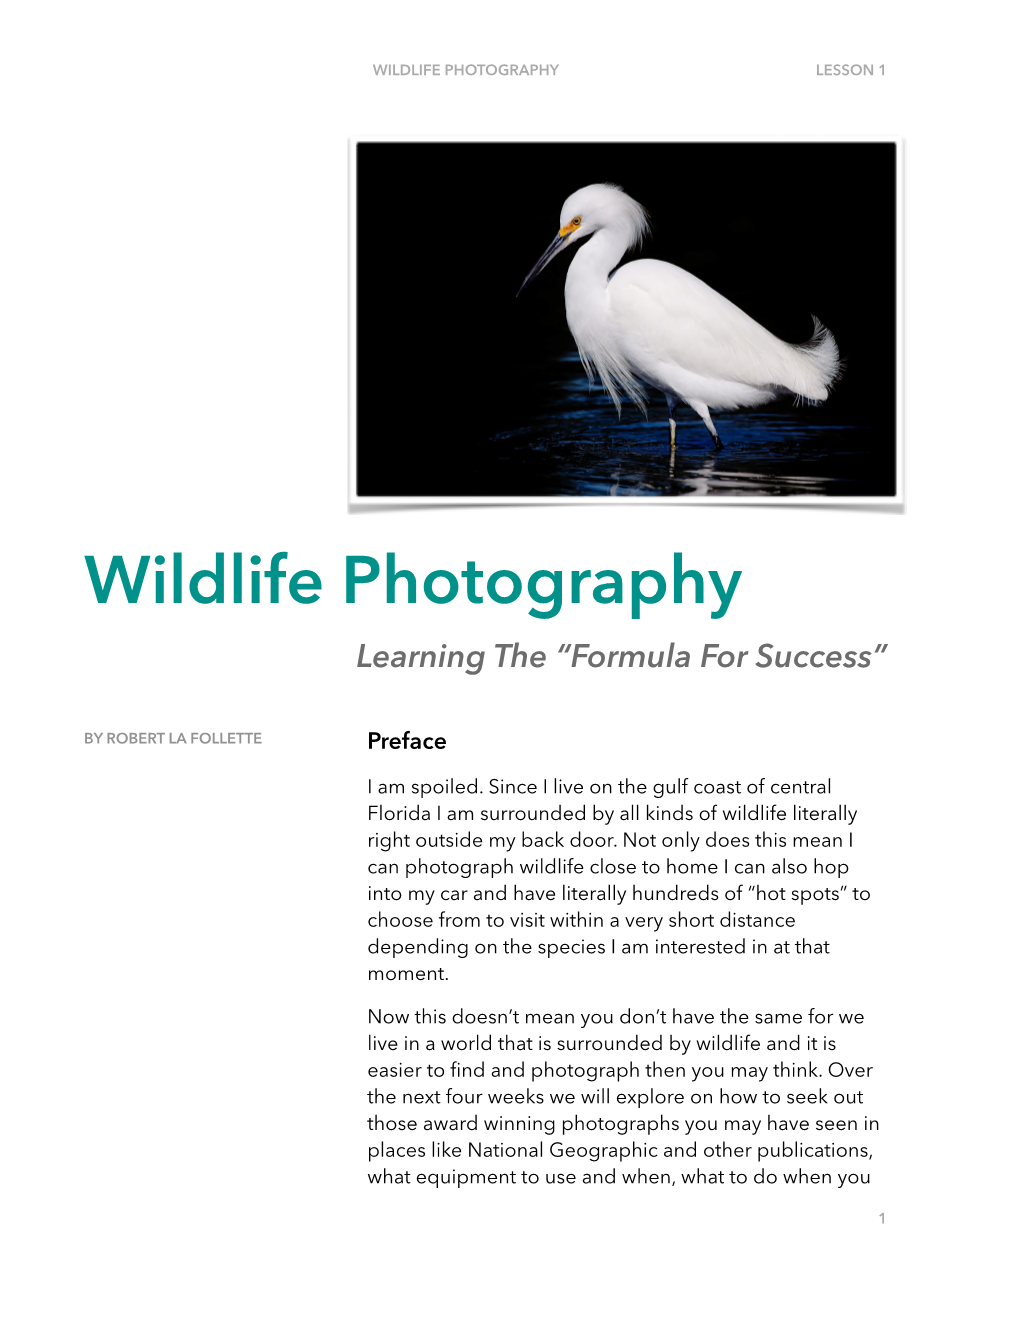 Wildlife Photography Lesson 1